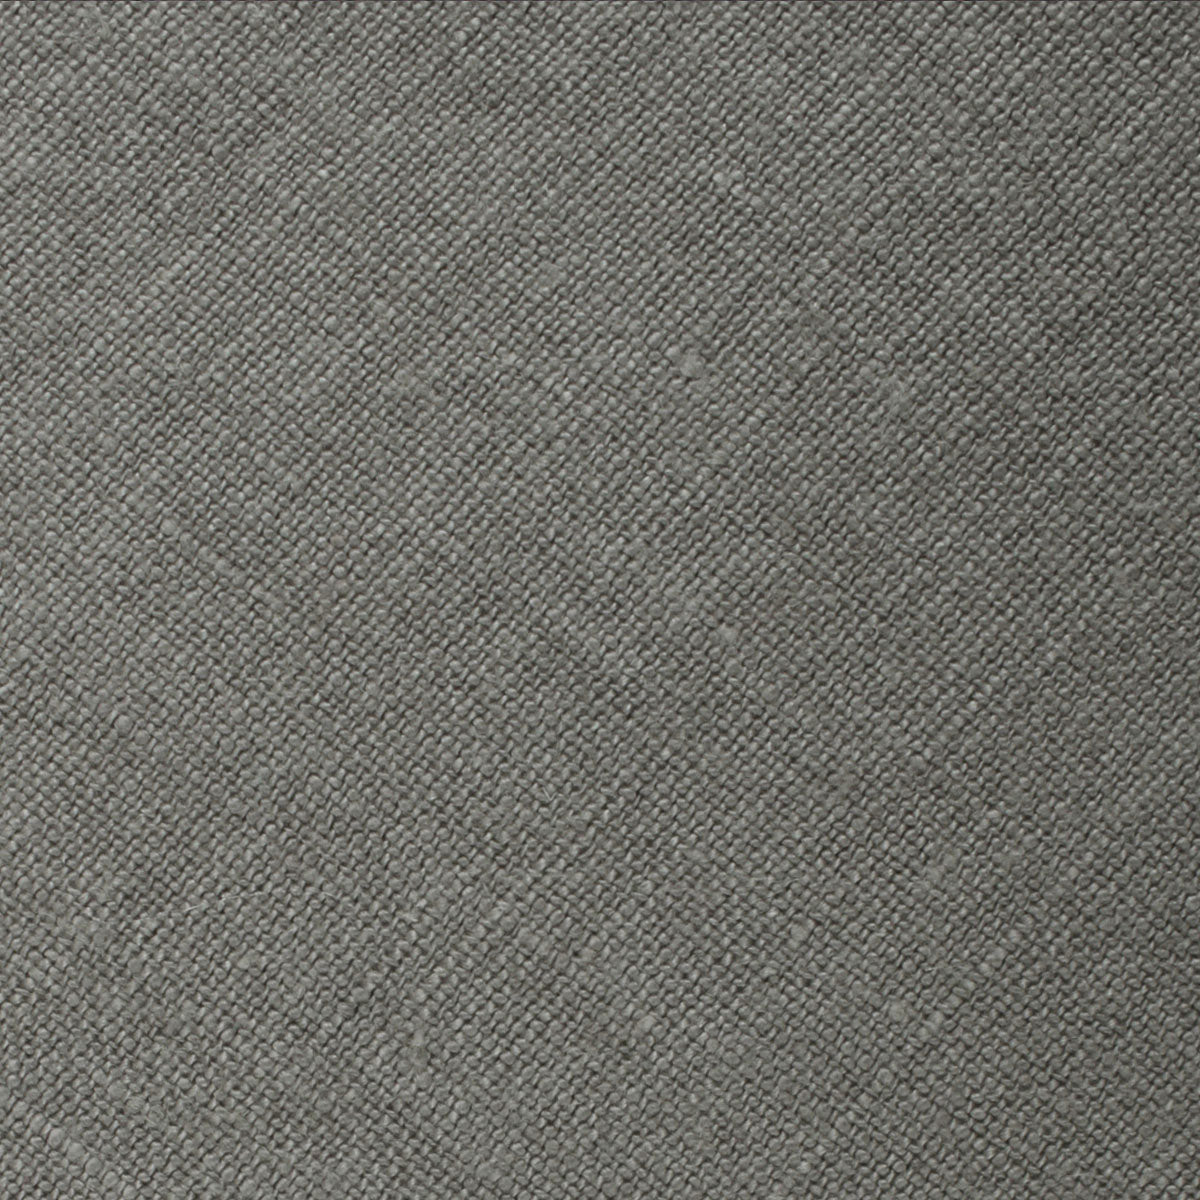 Mercury Charcoal Linen Self Bow Tie Fabric